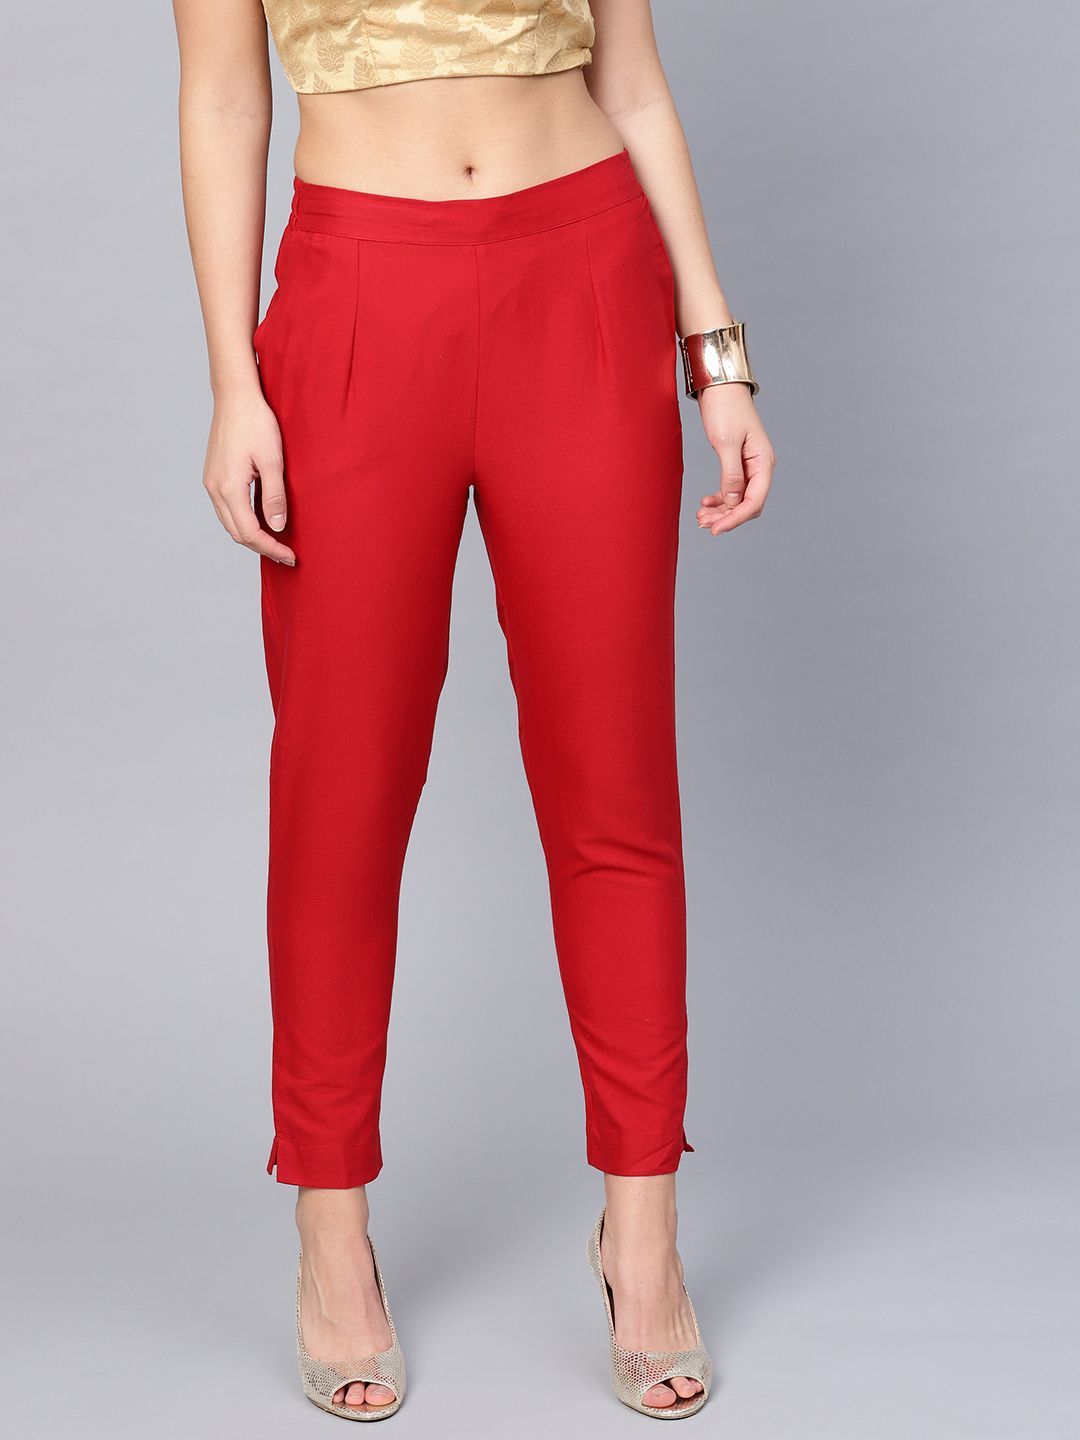 Women's Red Cotton Solid Cigarette Pants - Juniper